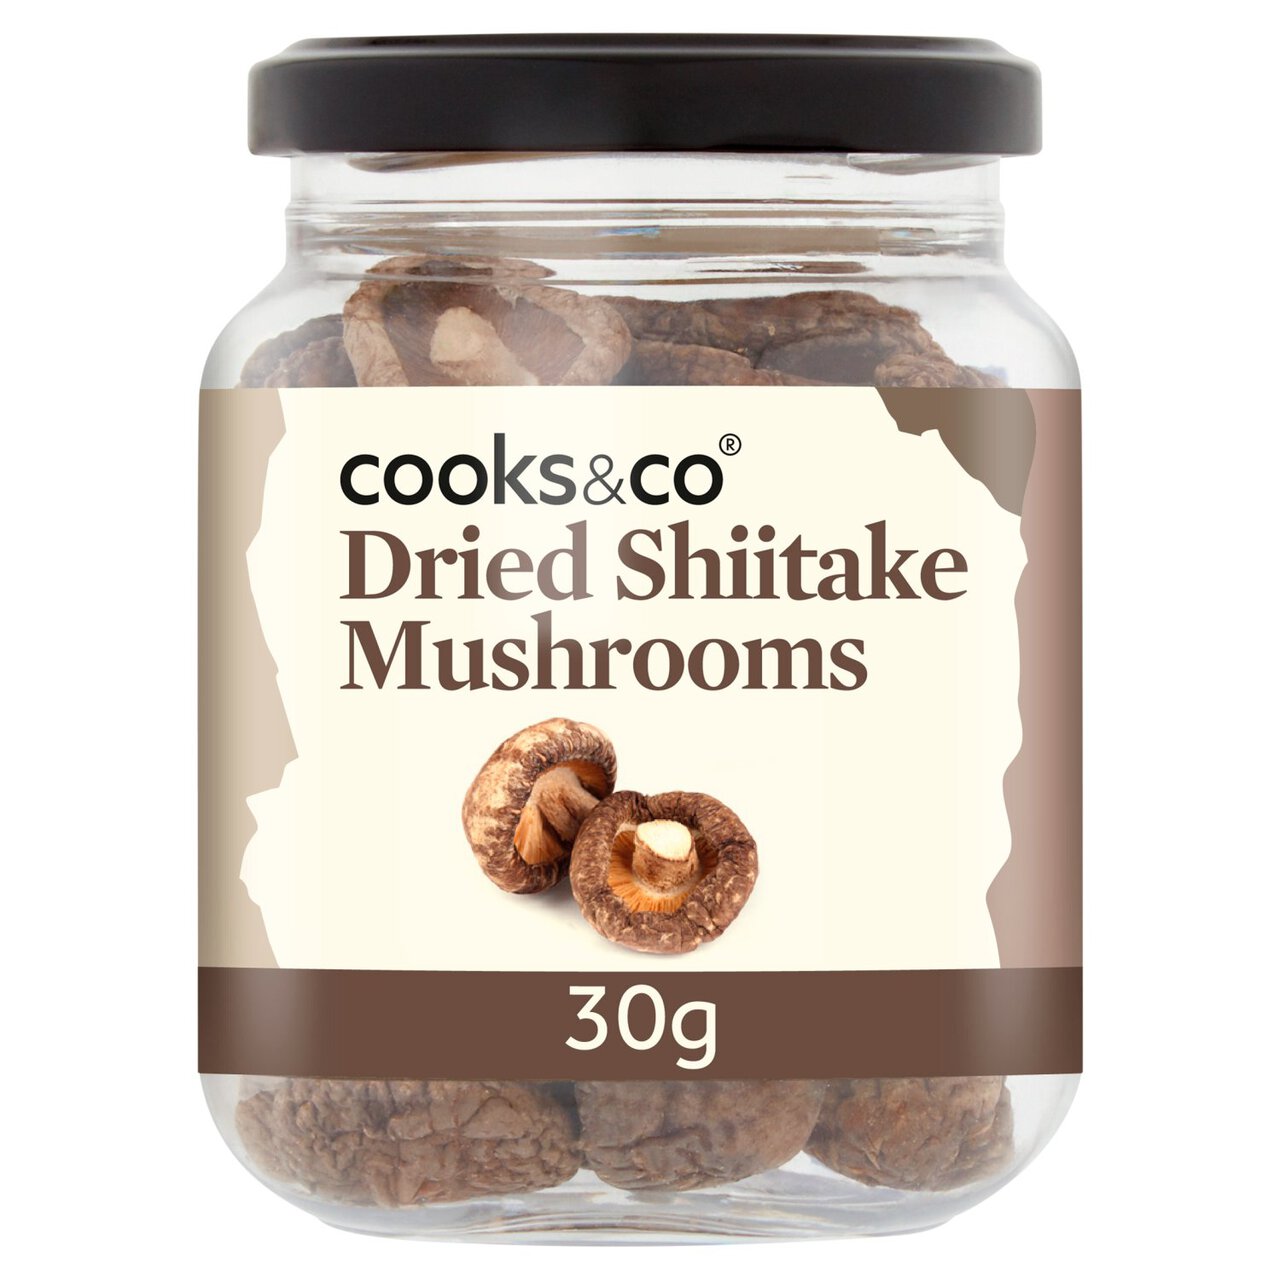 Cooks & Co Dried Shiitake Mushrooms 30g